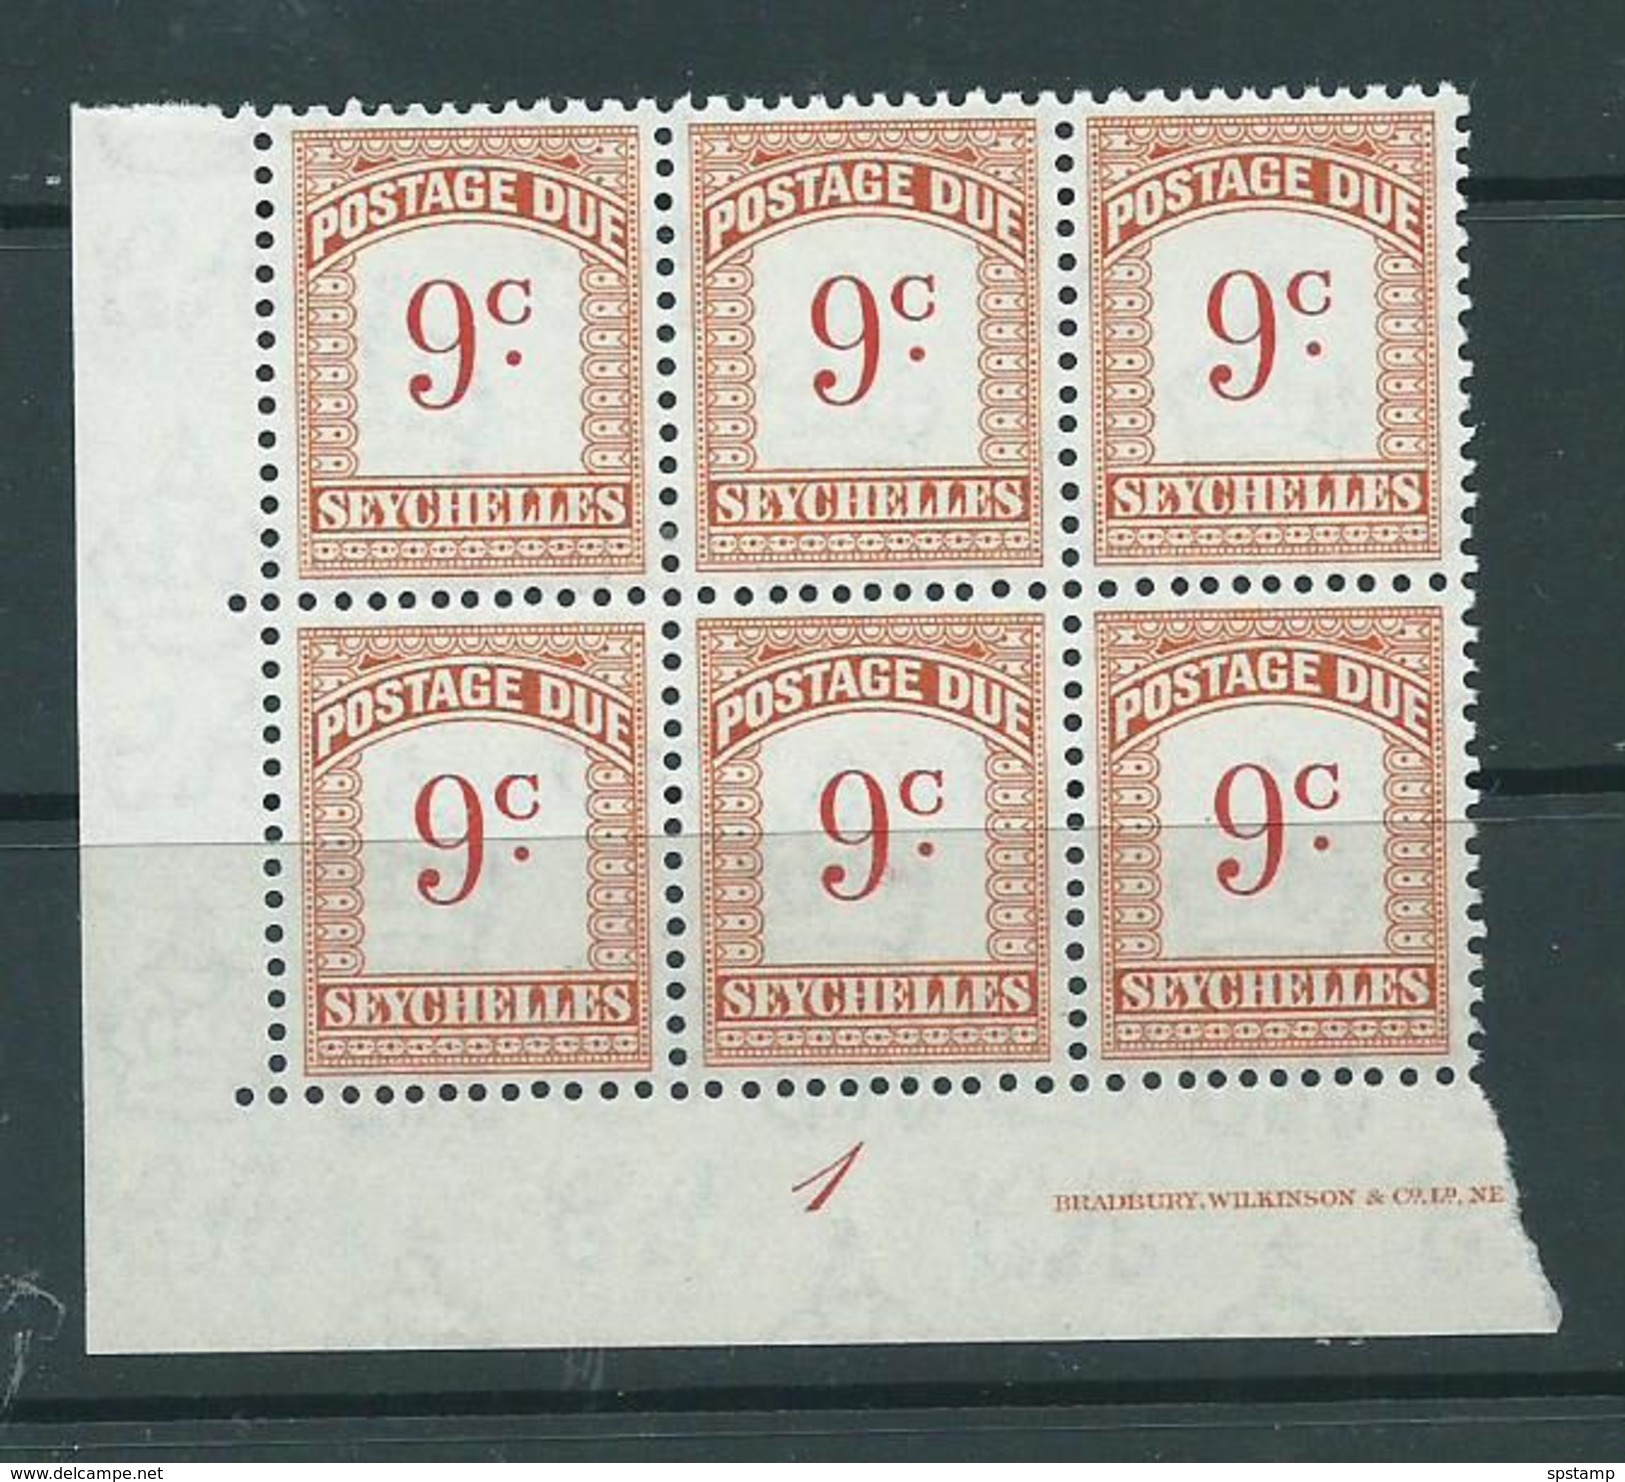 Seychelles 1951 Postage Dues 9c Brown-Orange Plate Number Block Of 6 MNH - Seychelles (...-1976)